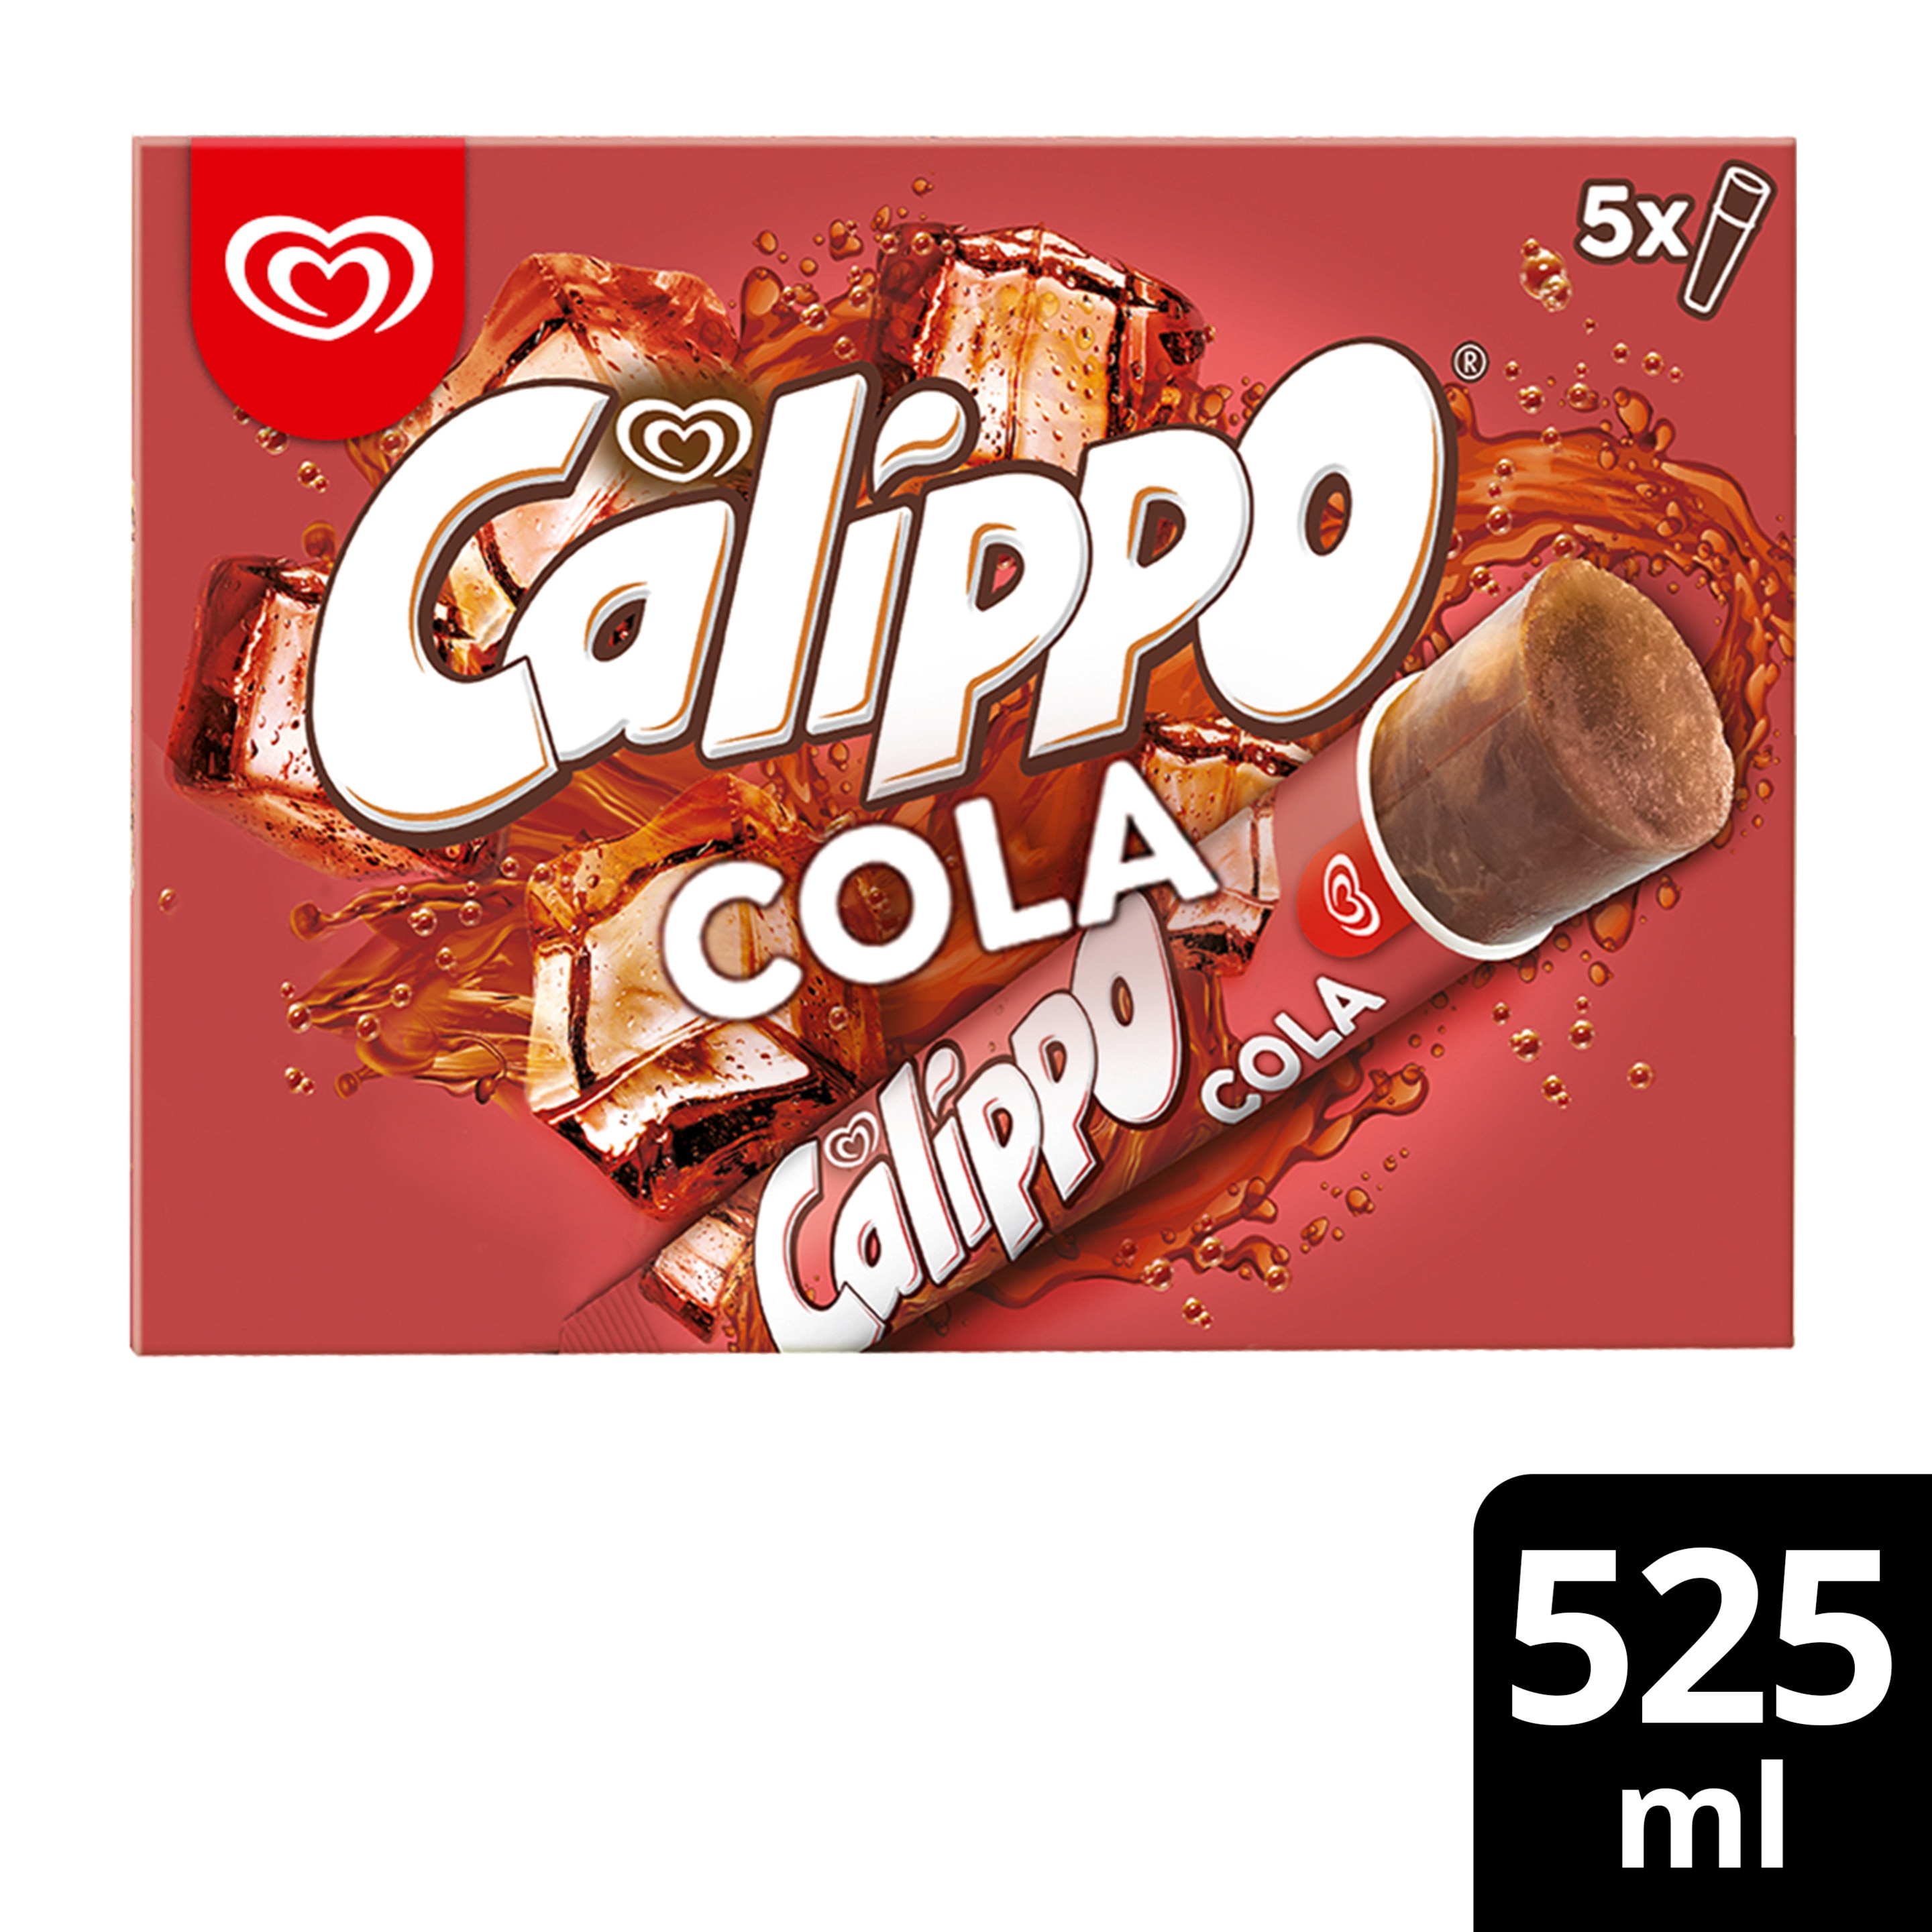 Calippo Cola Multipack 5X